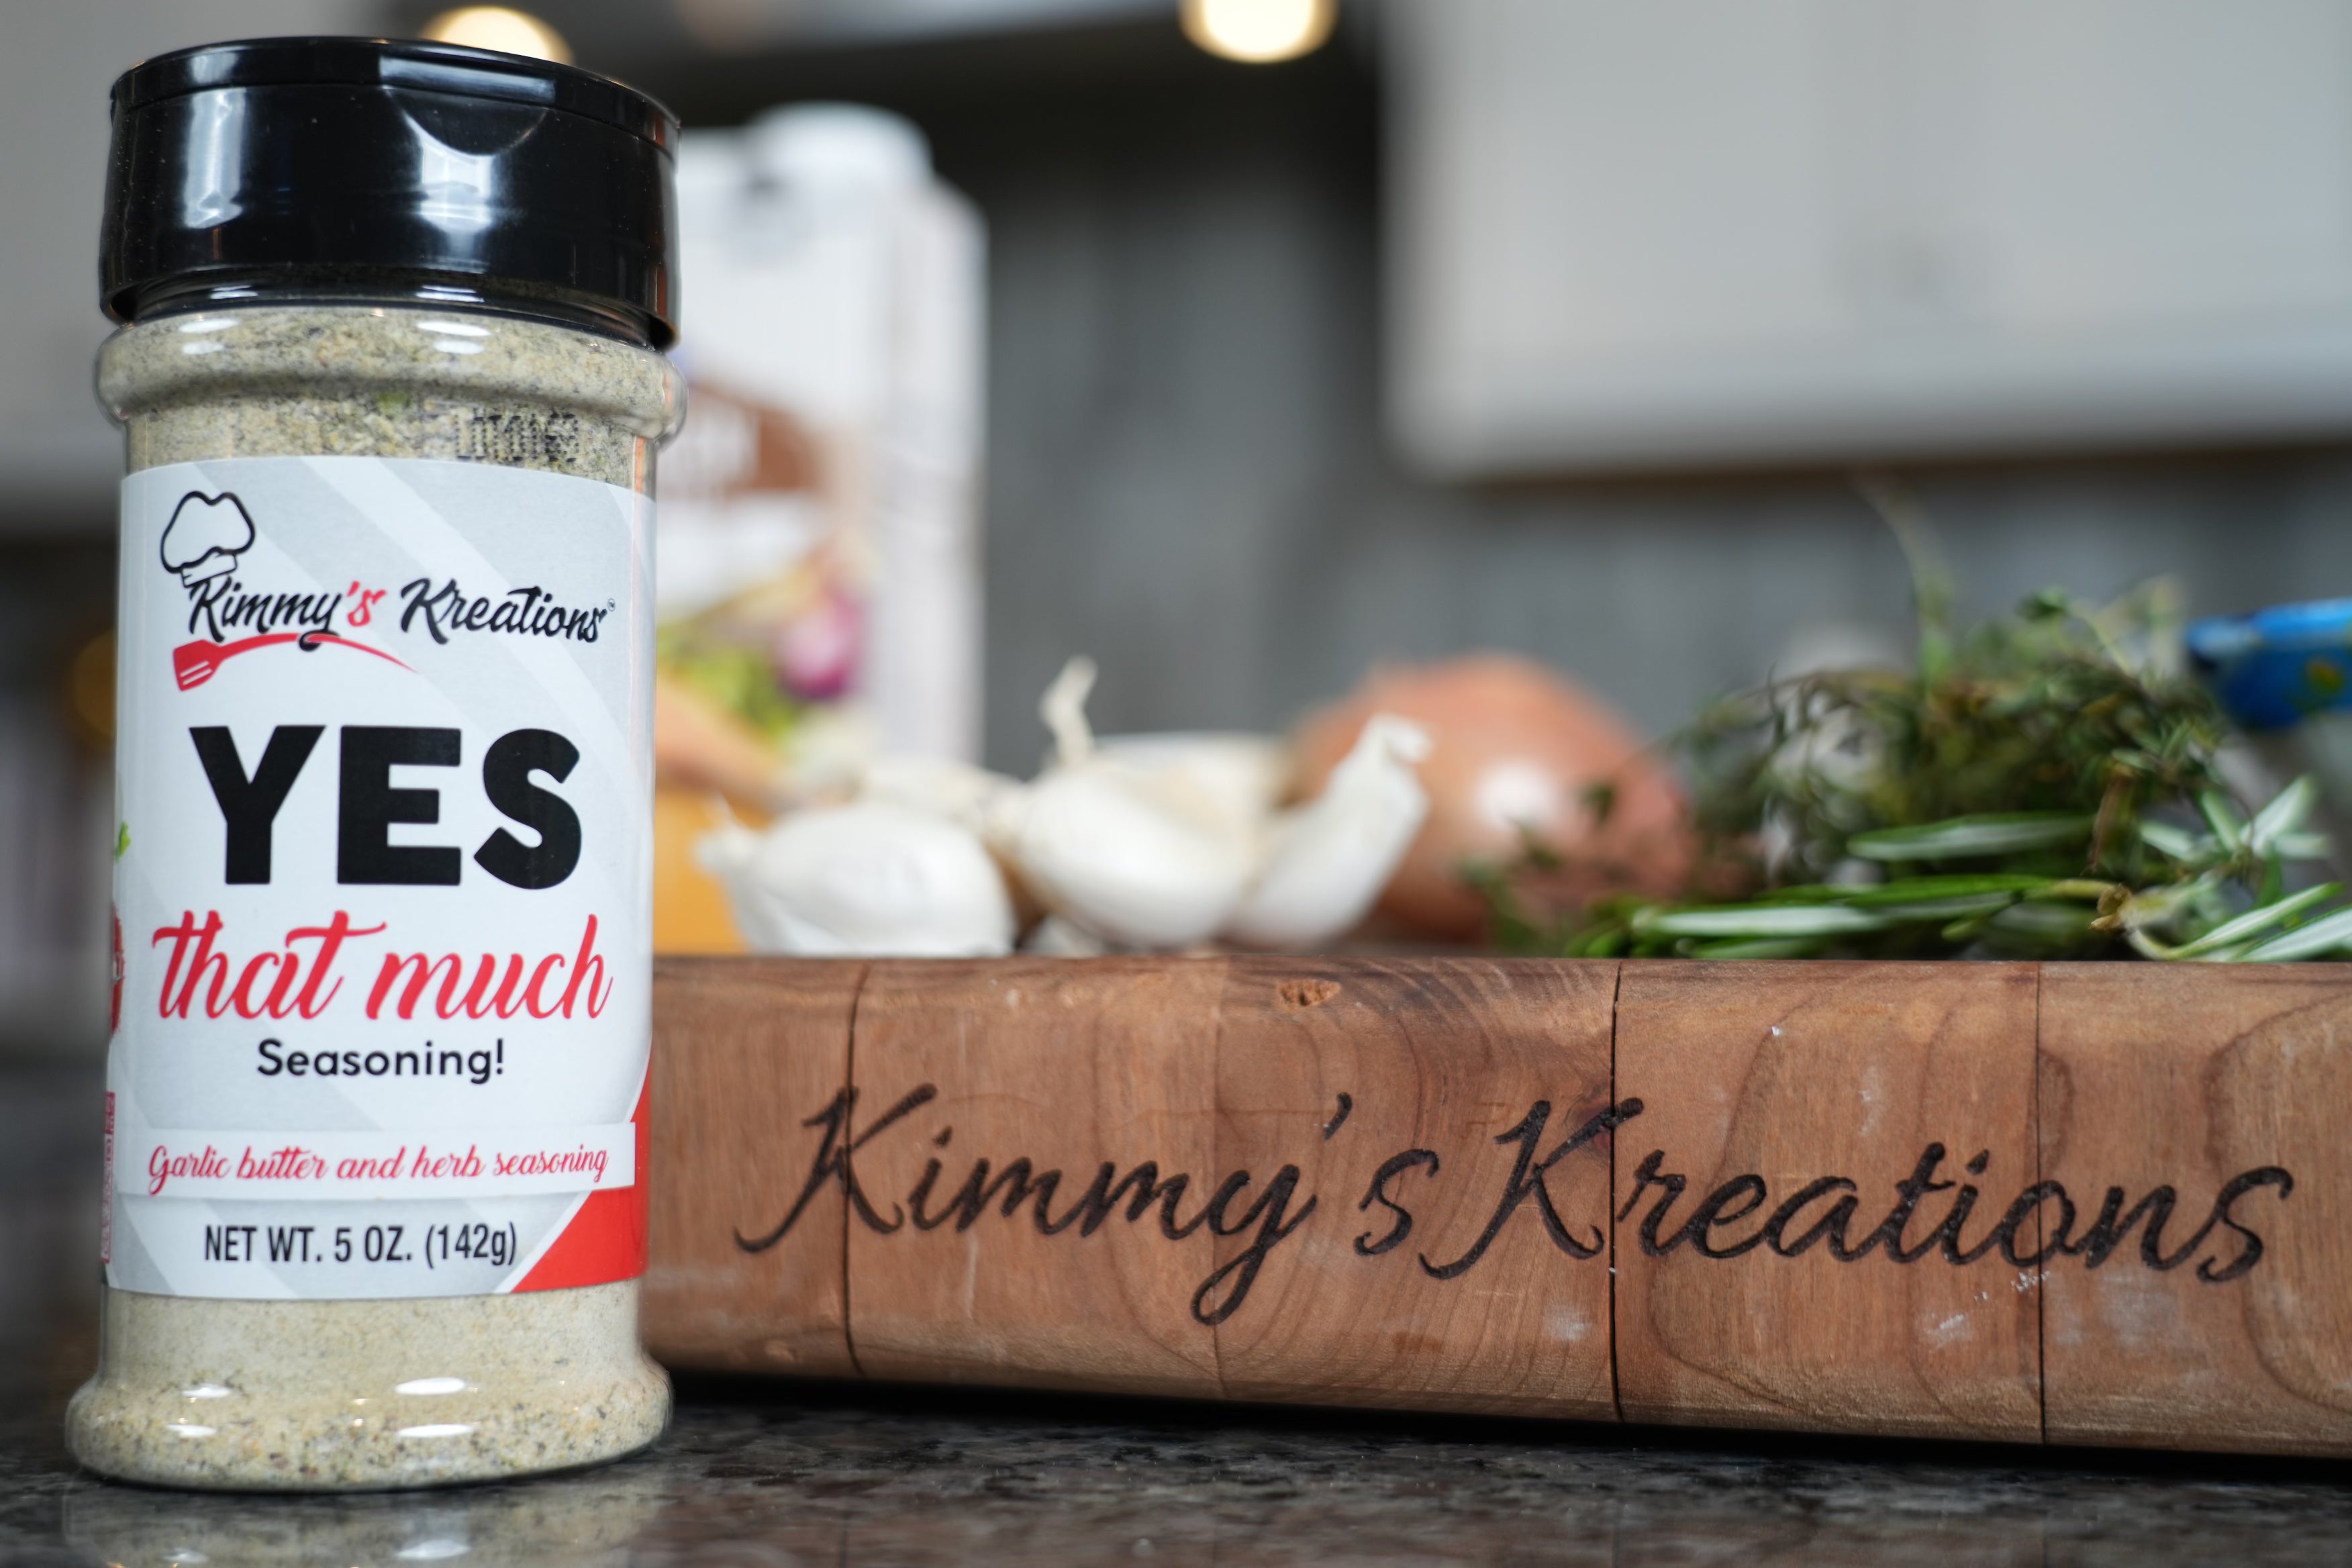 Going through my seasoning cabinet - Kimmy's Kreations